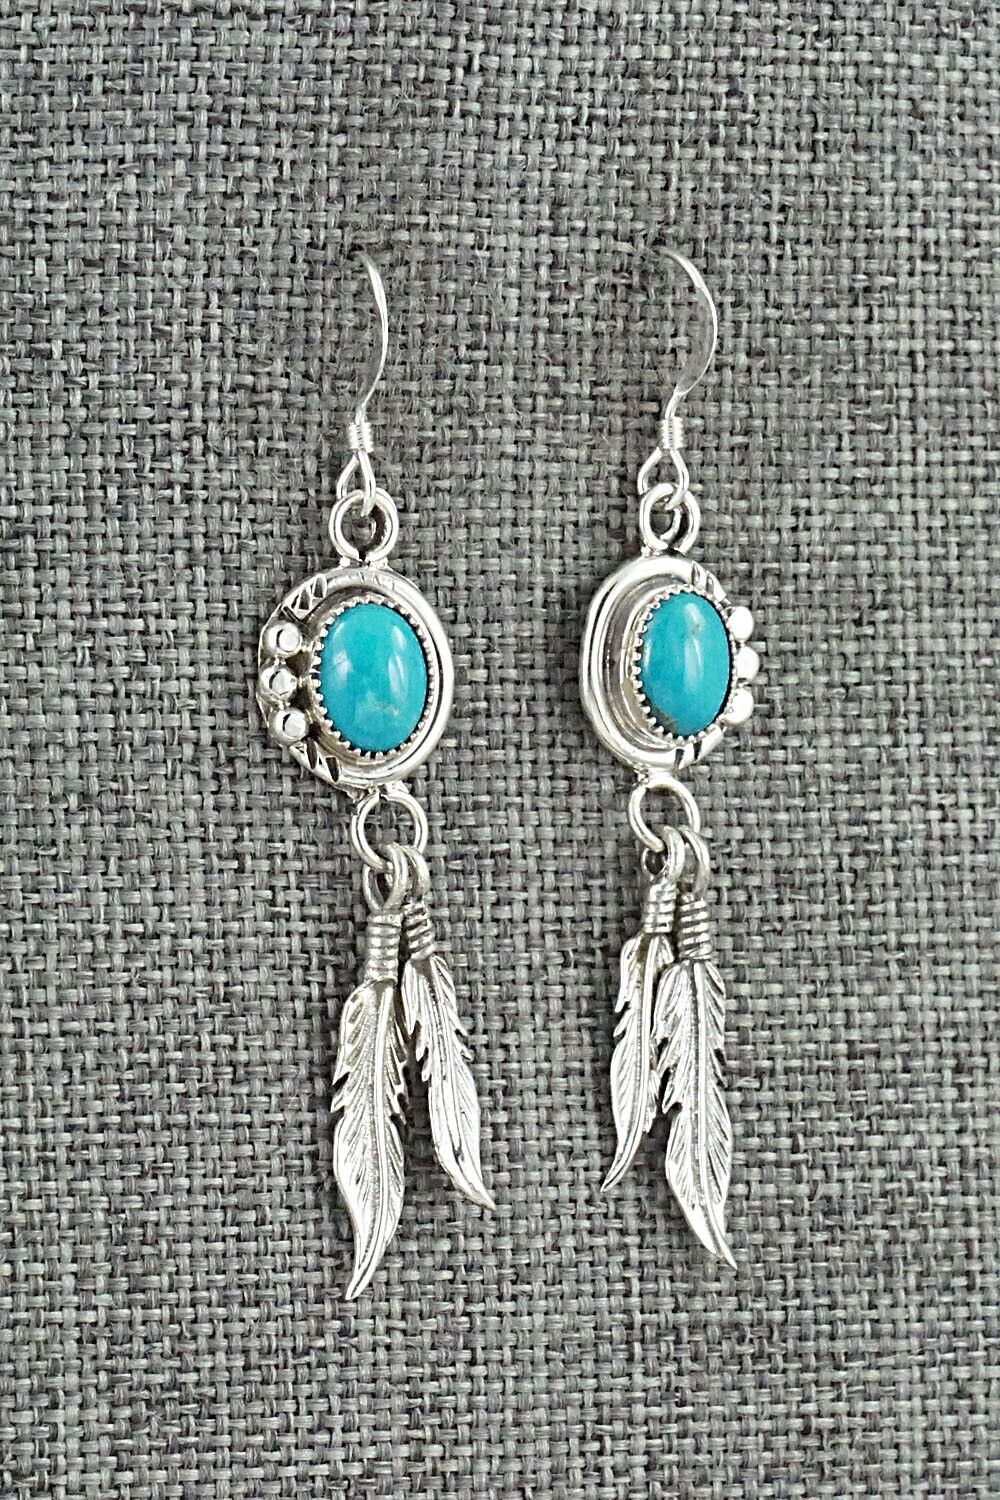 Turquoise & Sterling Silver Earrings - Rita Largo